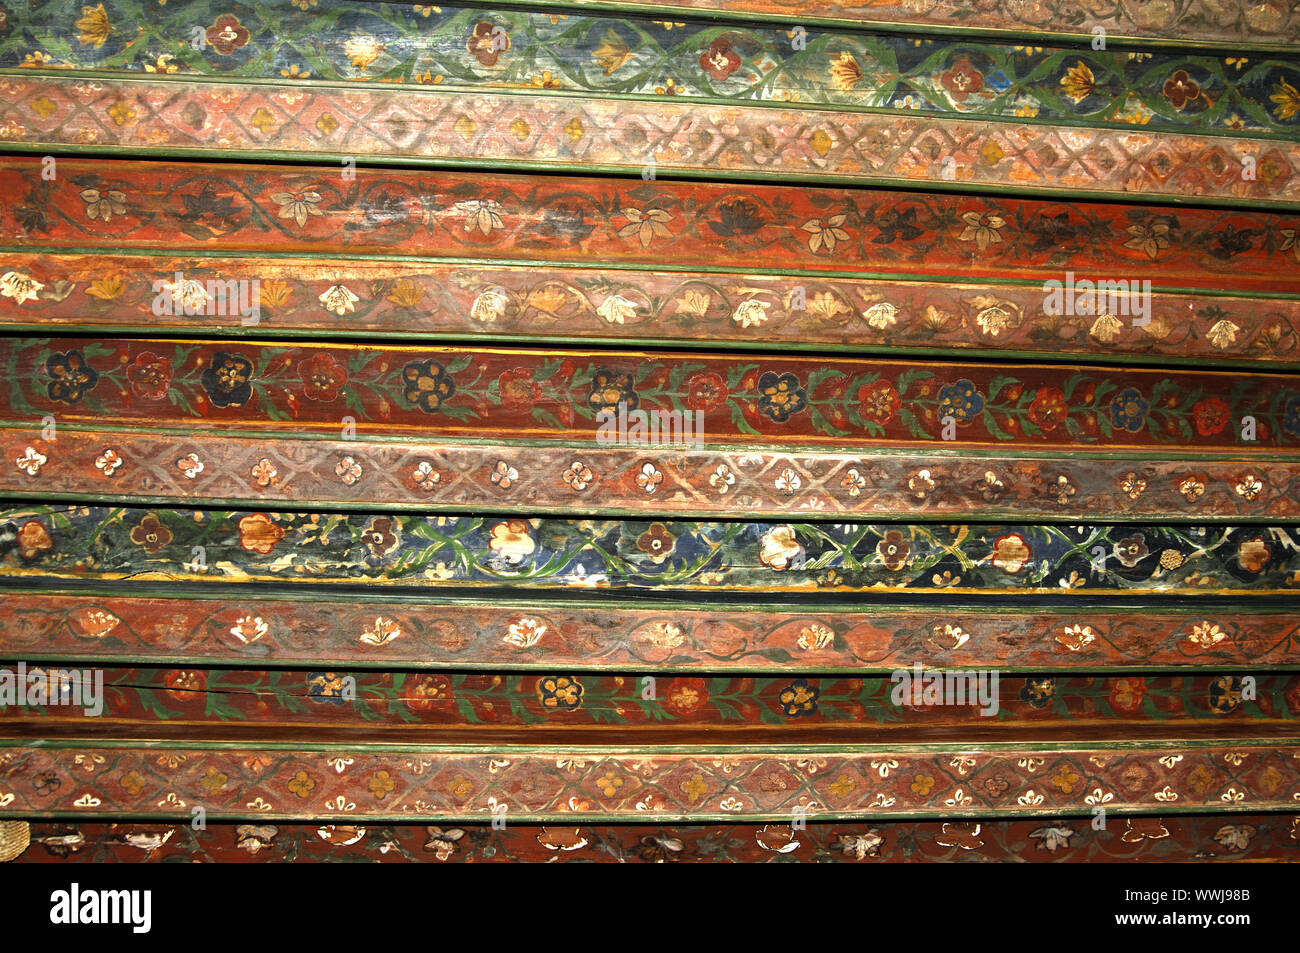 Arabesque coffered ceiling, Oman Stock Photo